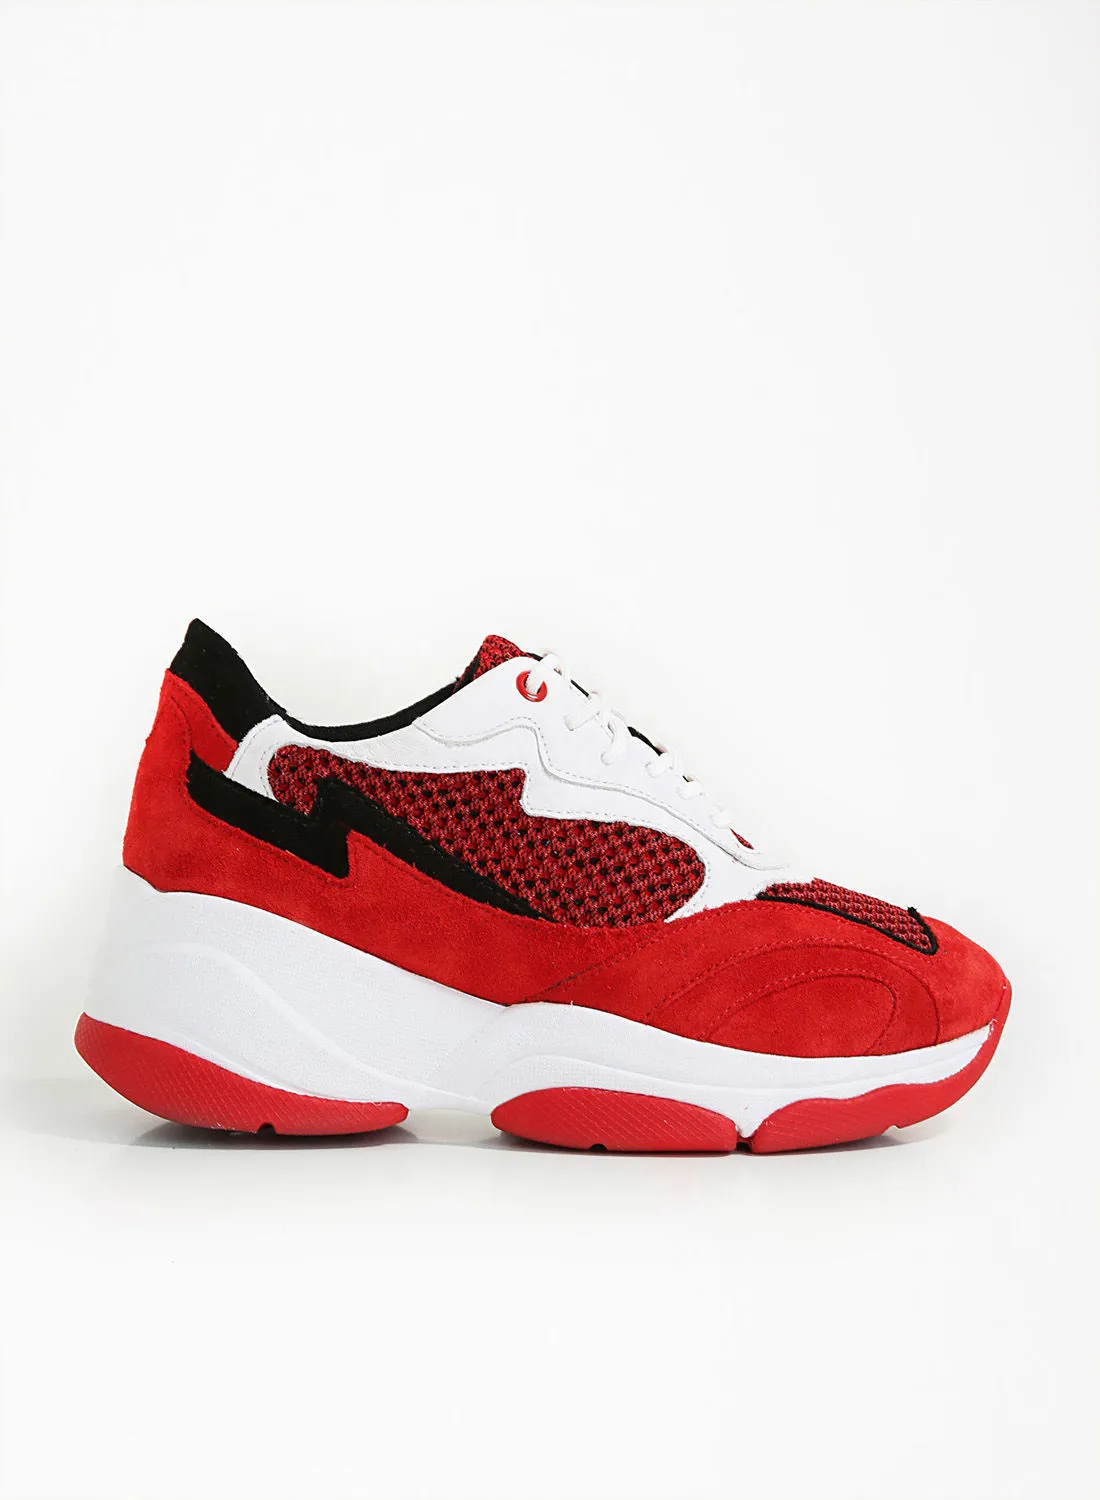 GEOX Casual Sneakers Red/Scarlet